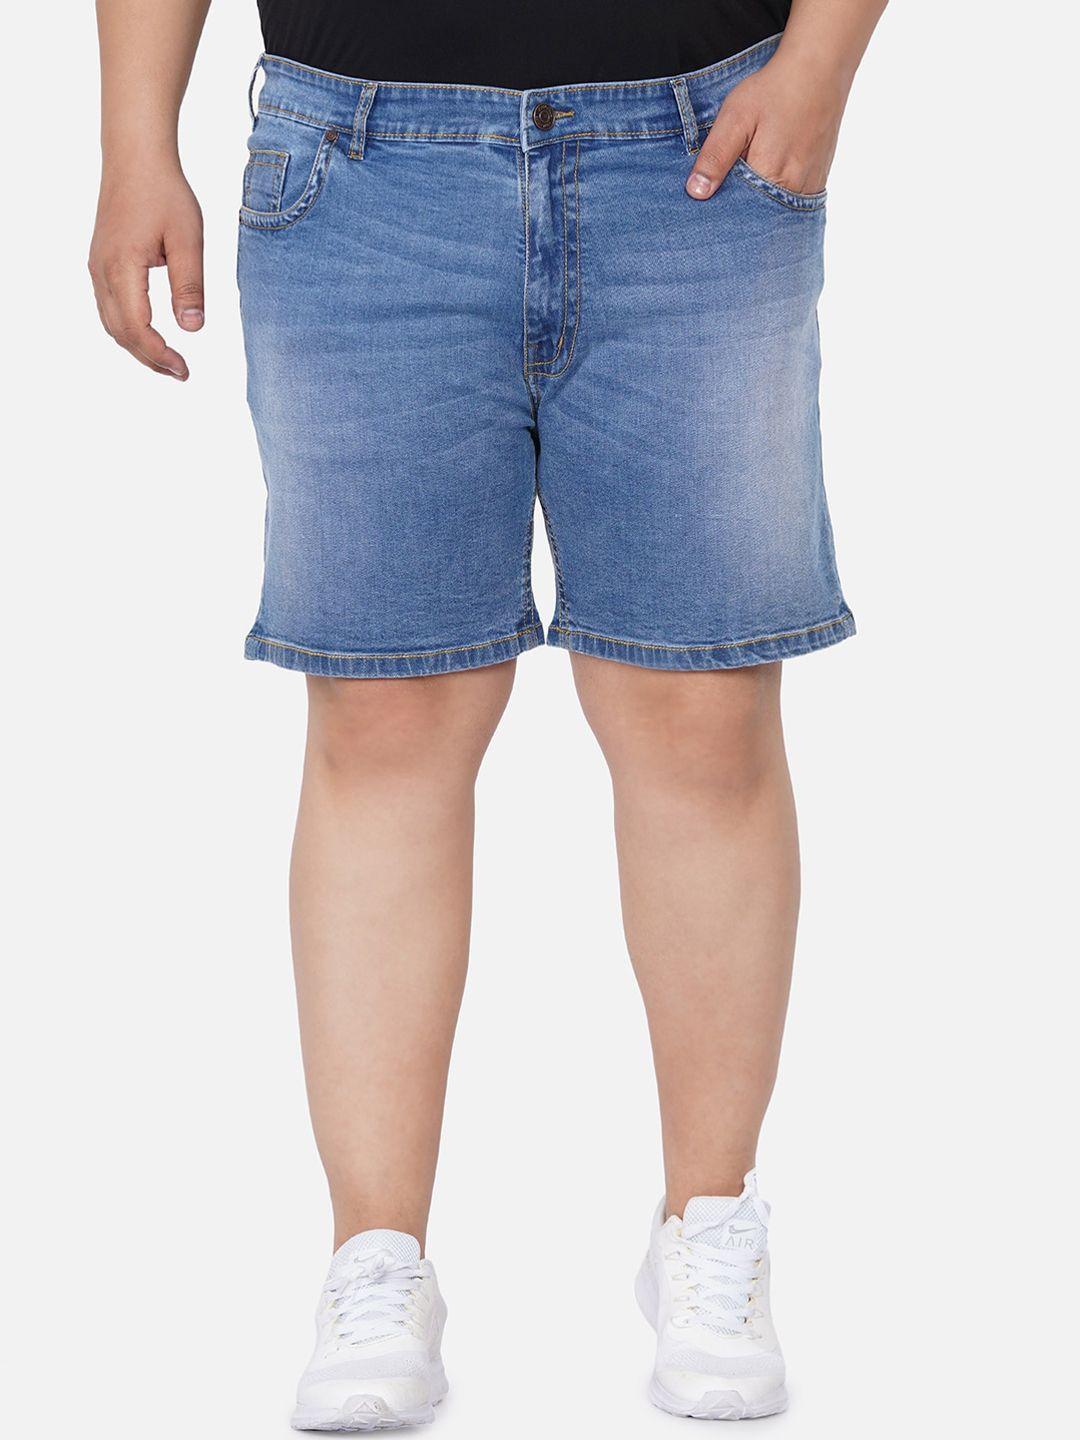 john-pride-men-plus-size-washed-washed-denim-shorts